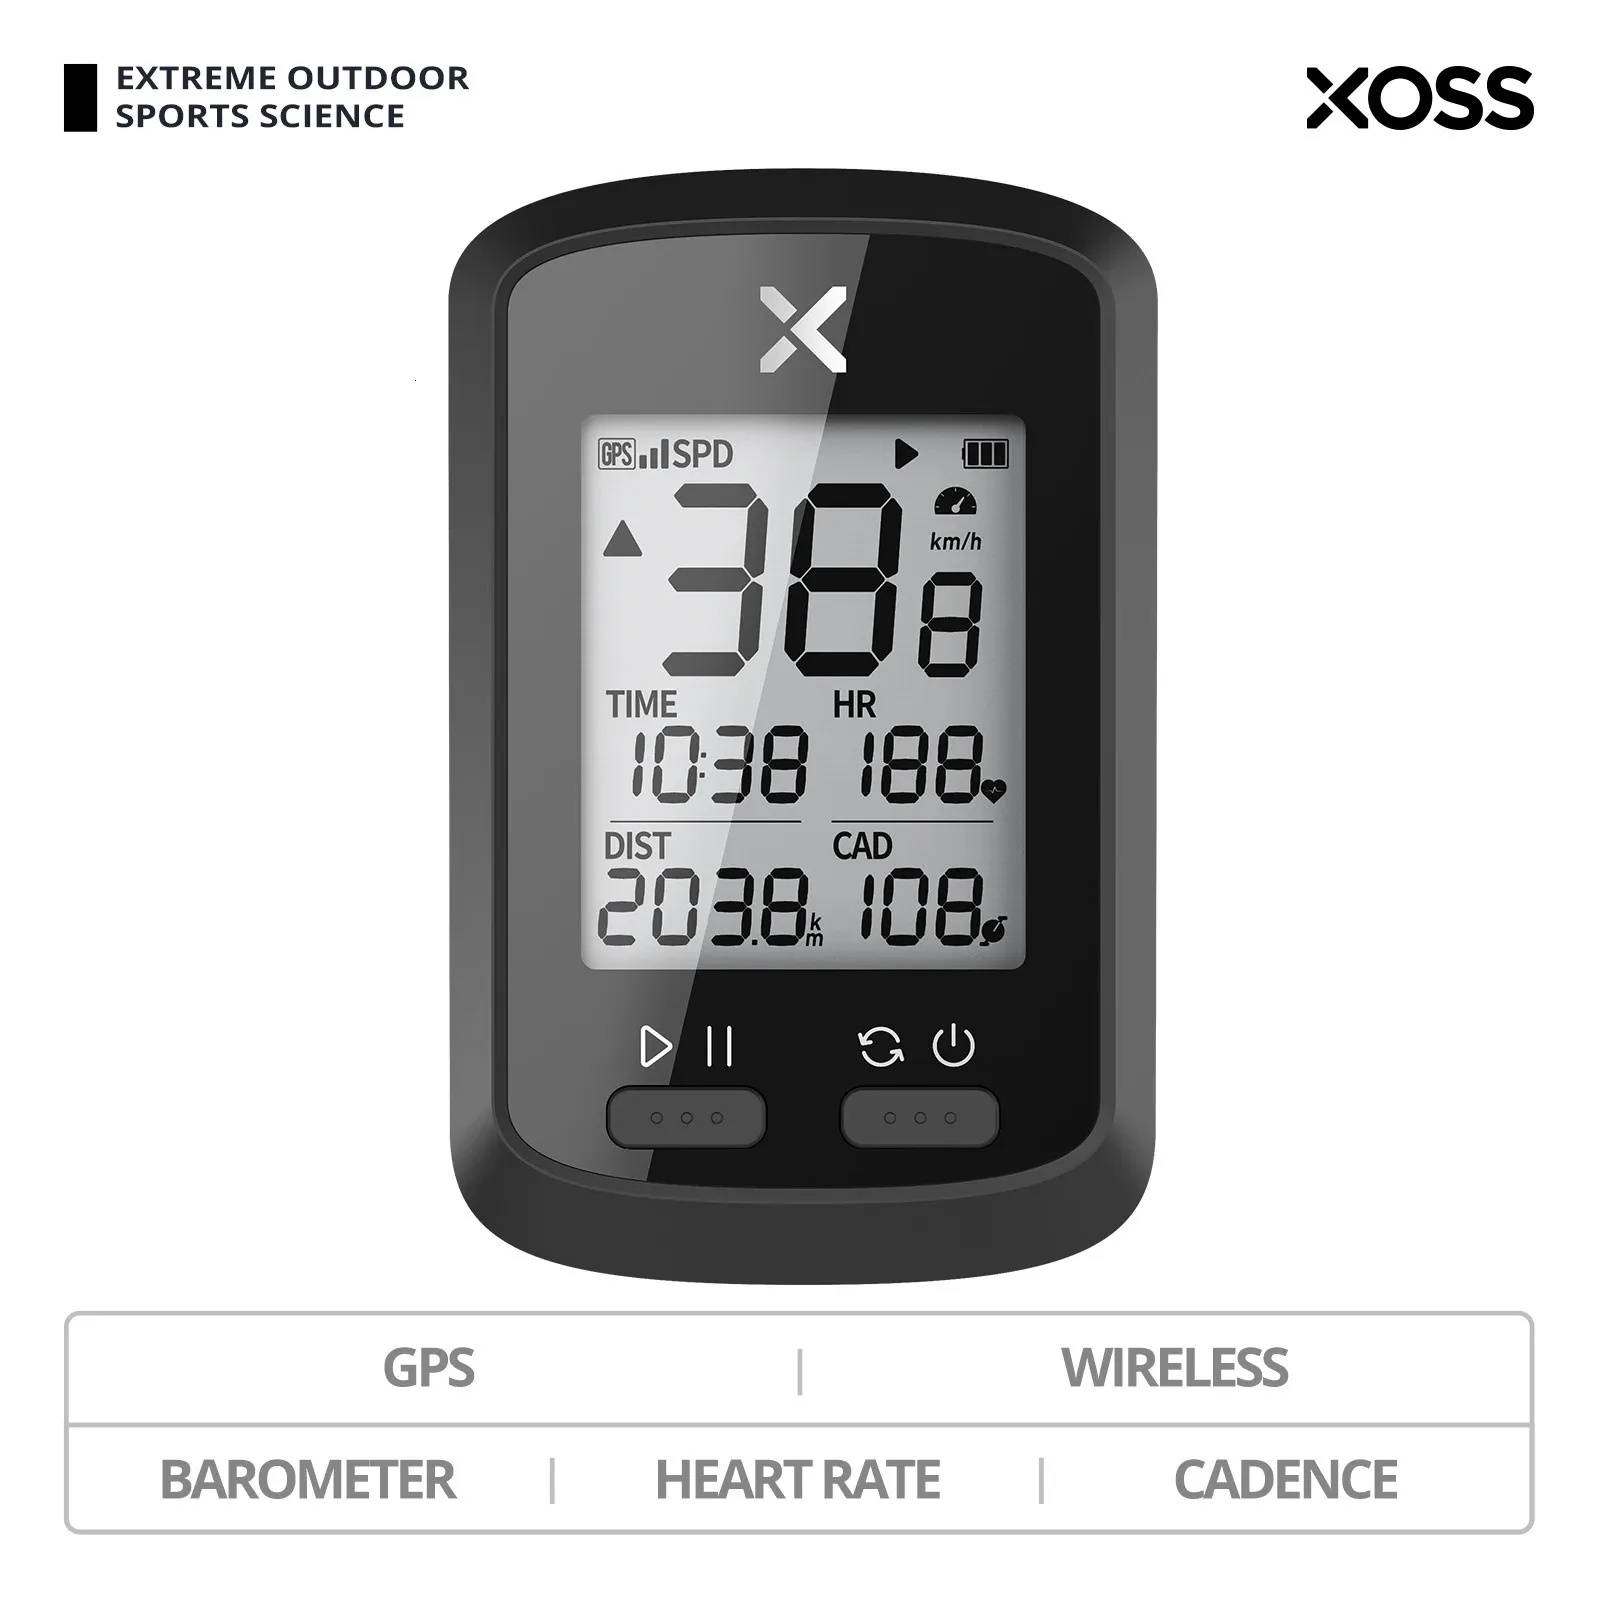 Xoss G Plus GPS -велосипедный велосипедный компьютер.